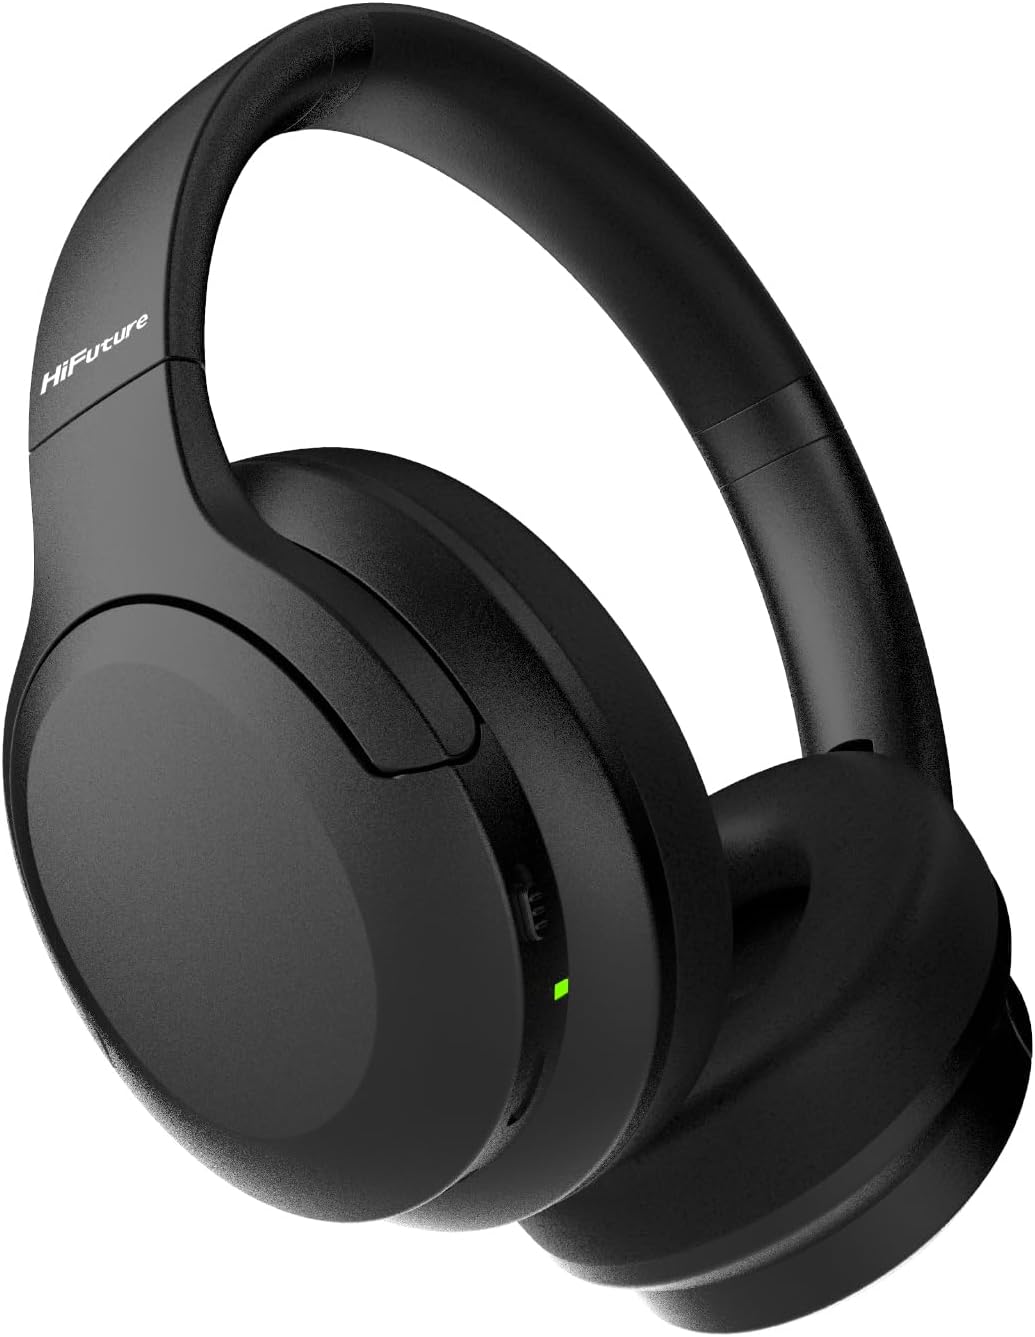 HiFuture FutureTour Over Ear ANC Headphones, Black, Wireless, One Size